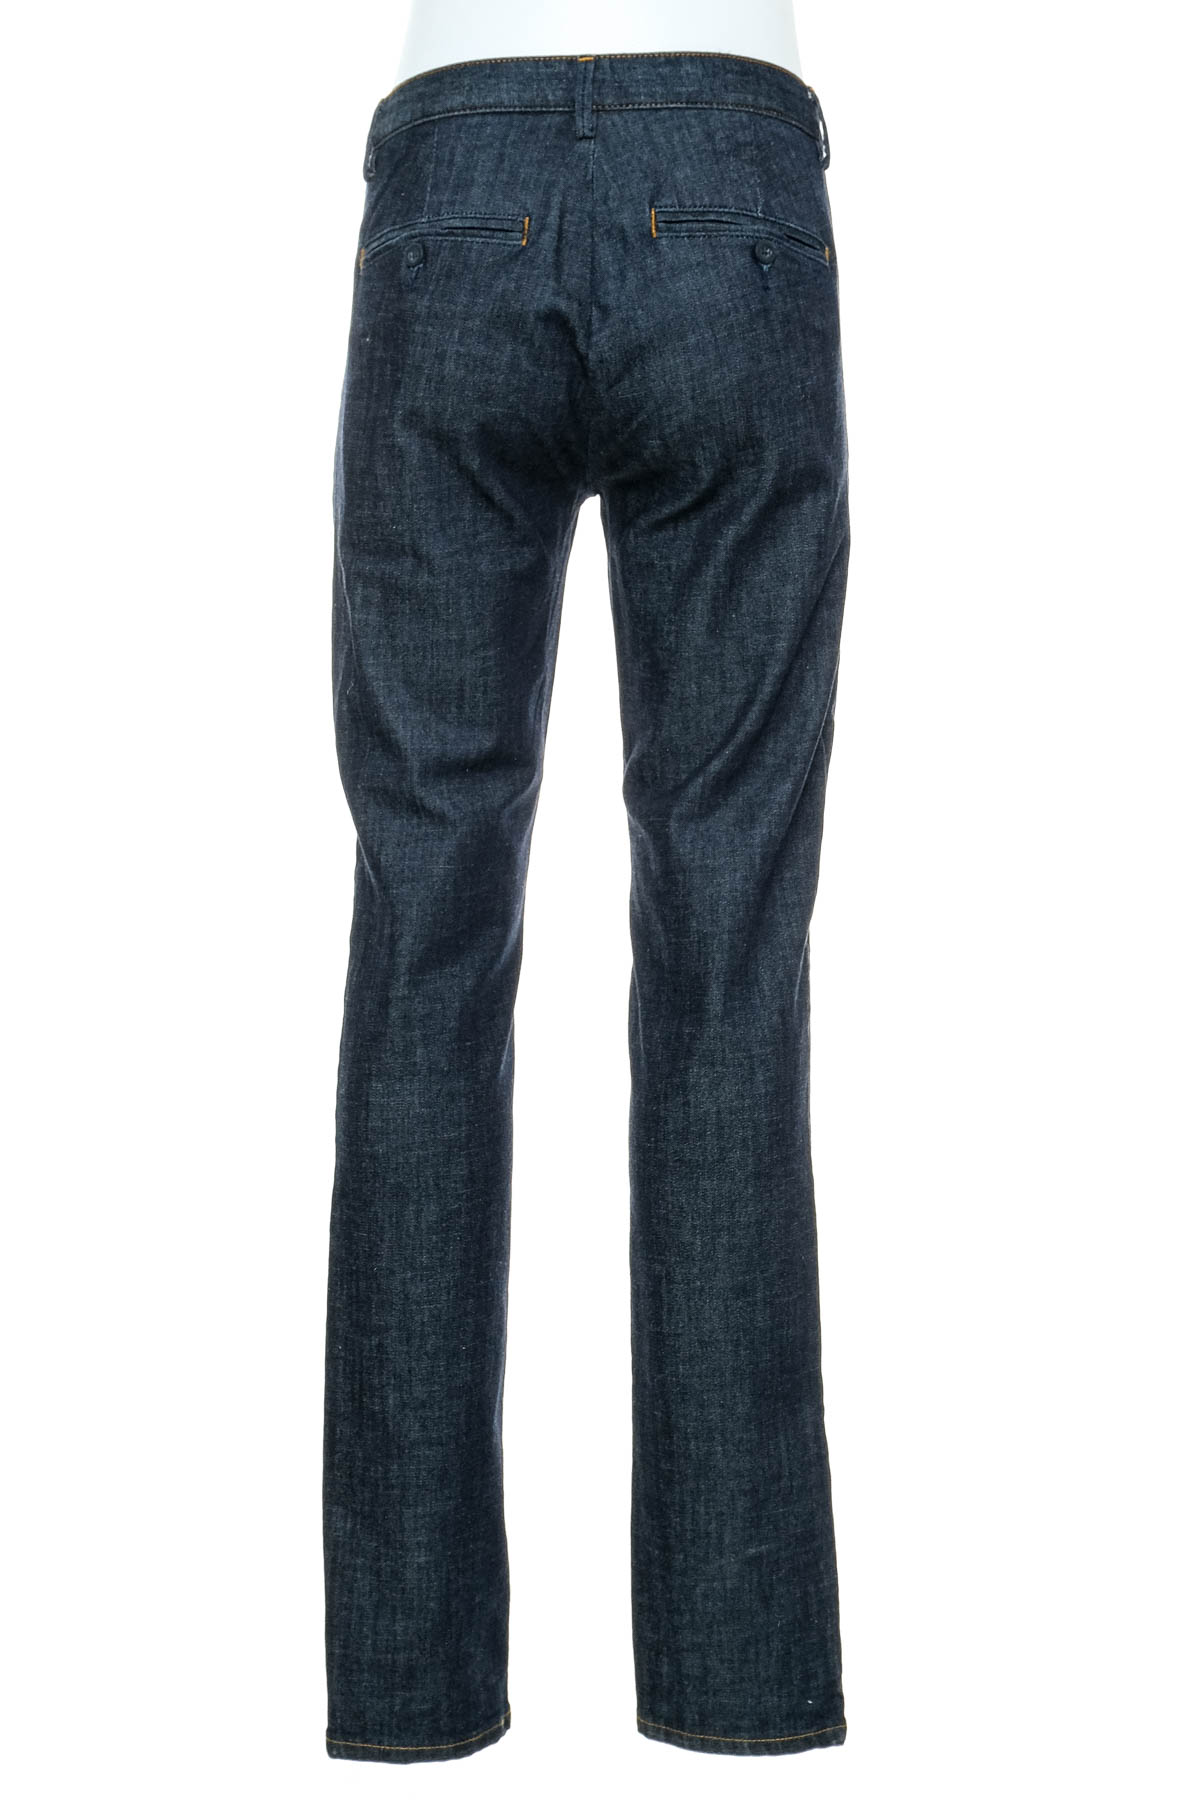 Men's jeans - United Colors of Benetton - 1